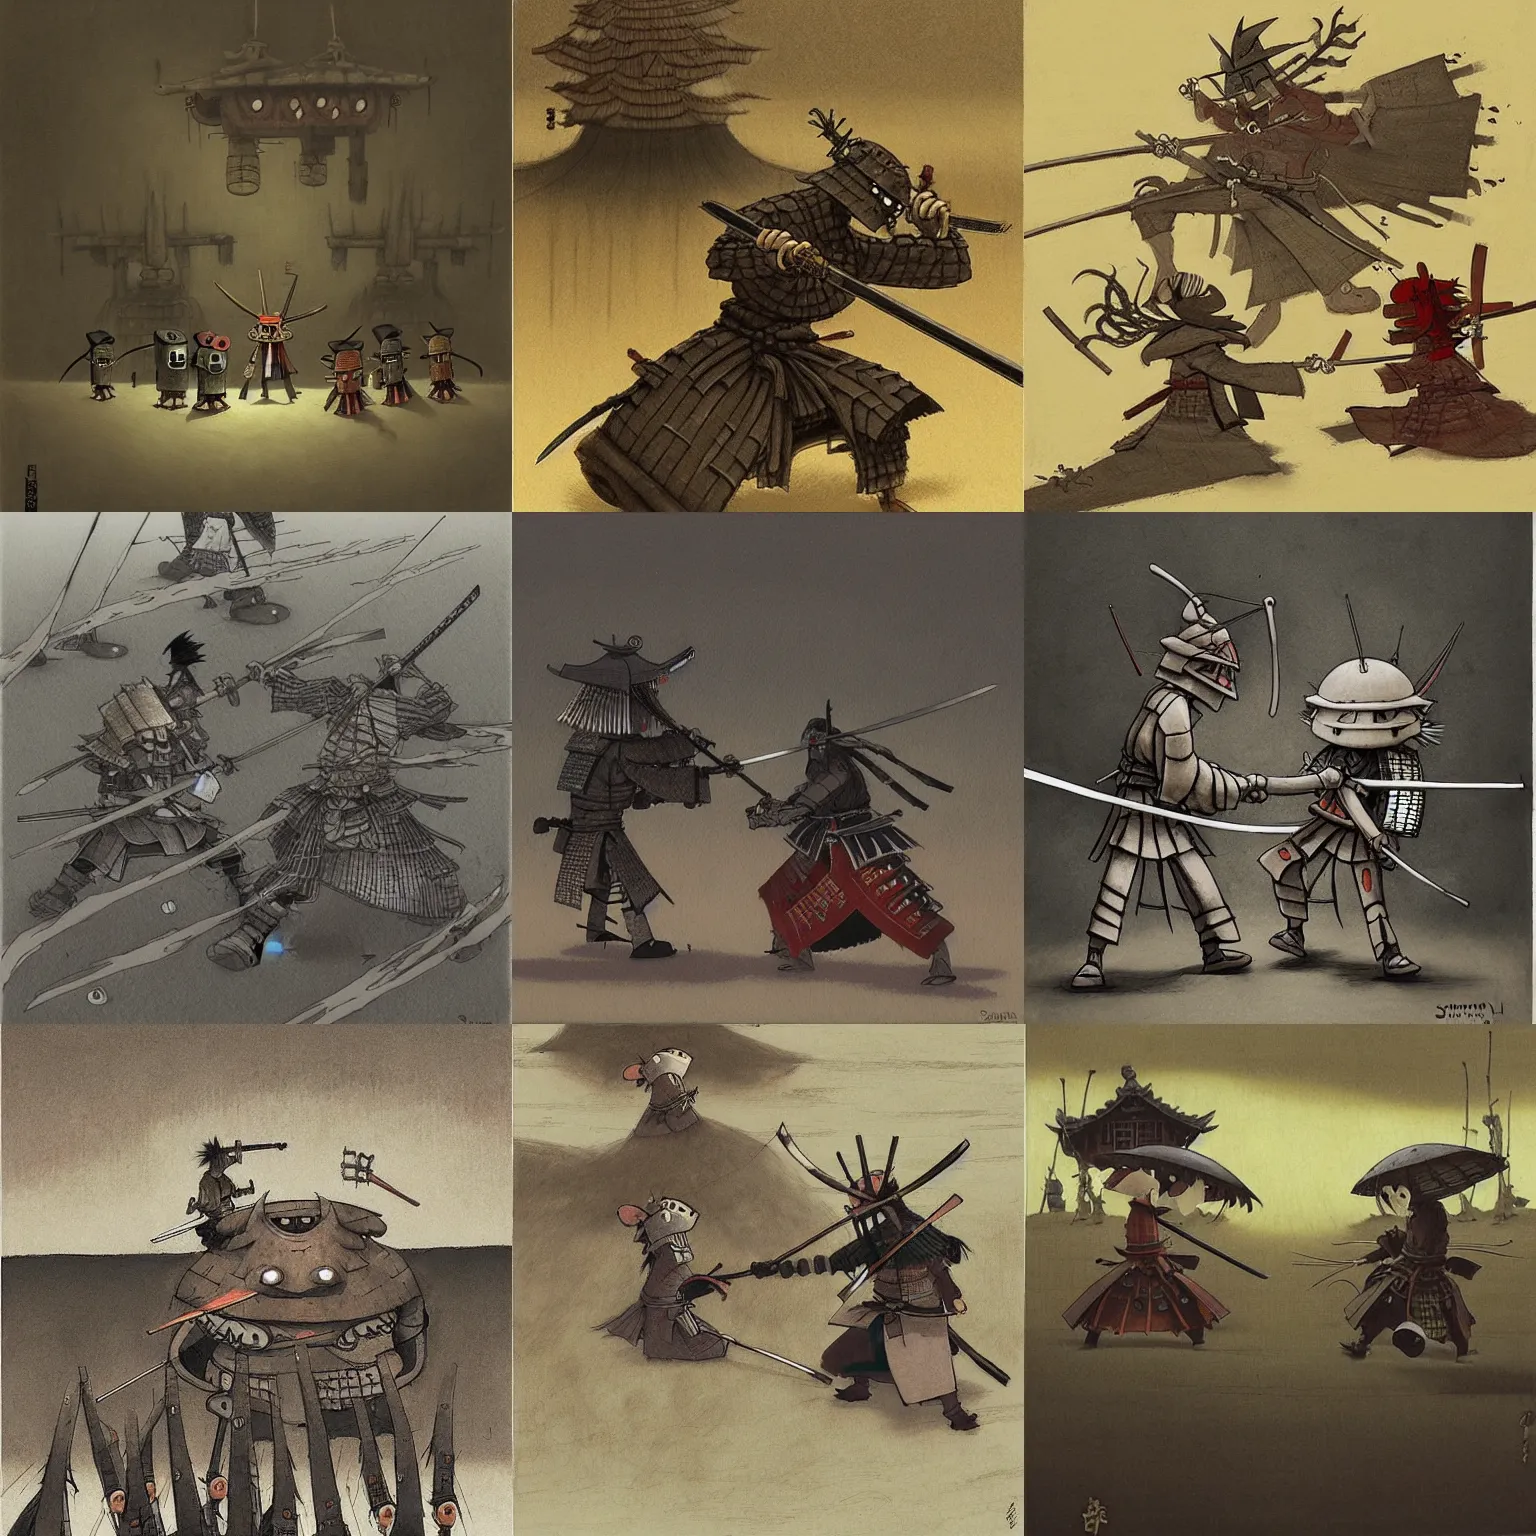 Prompt: samurai battle by shaun tan, style of john kenn mortensen, style of yoshitaka amano